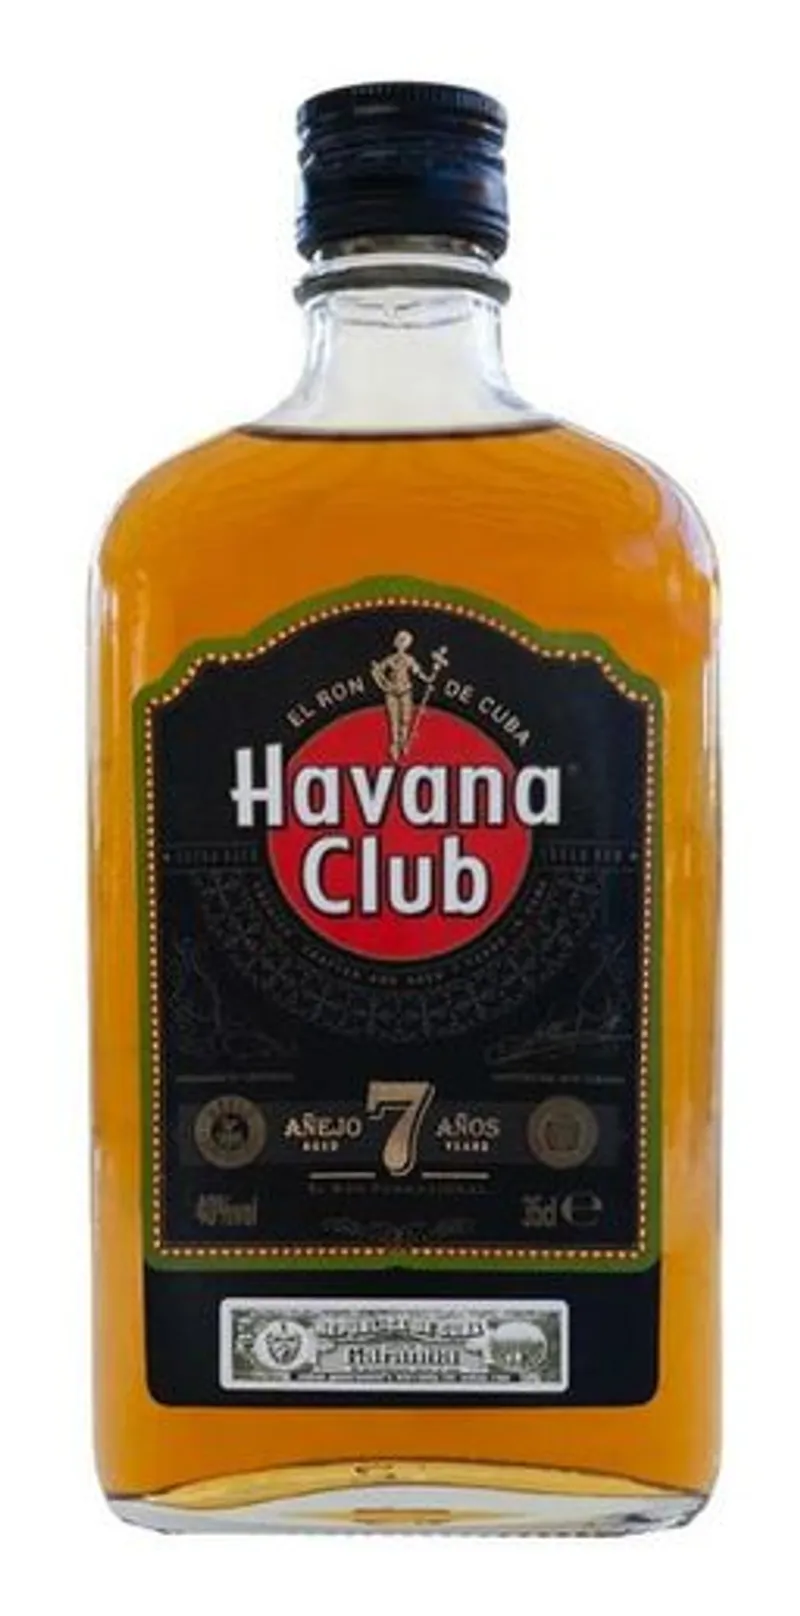 Caneca Havana club 7 años + 2 redbull